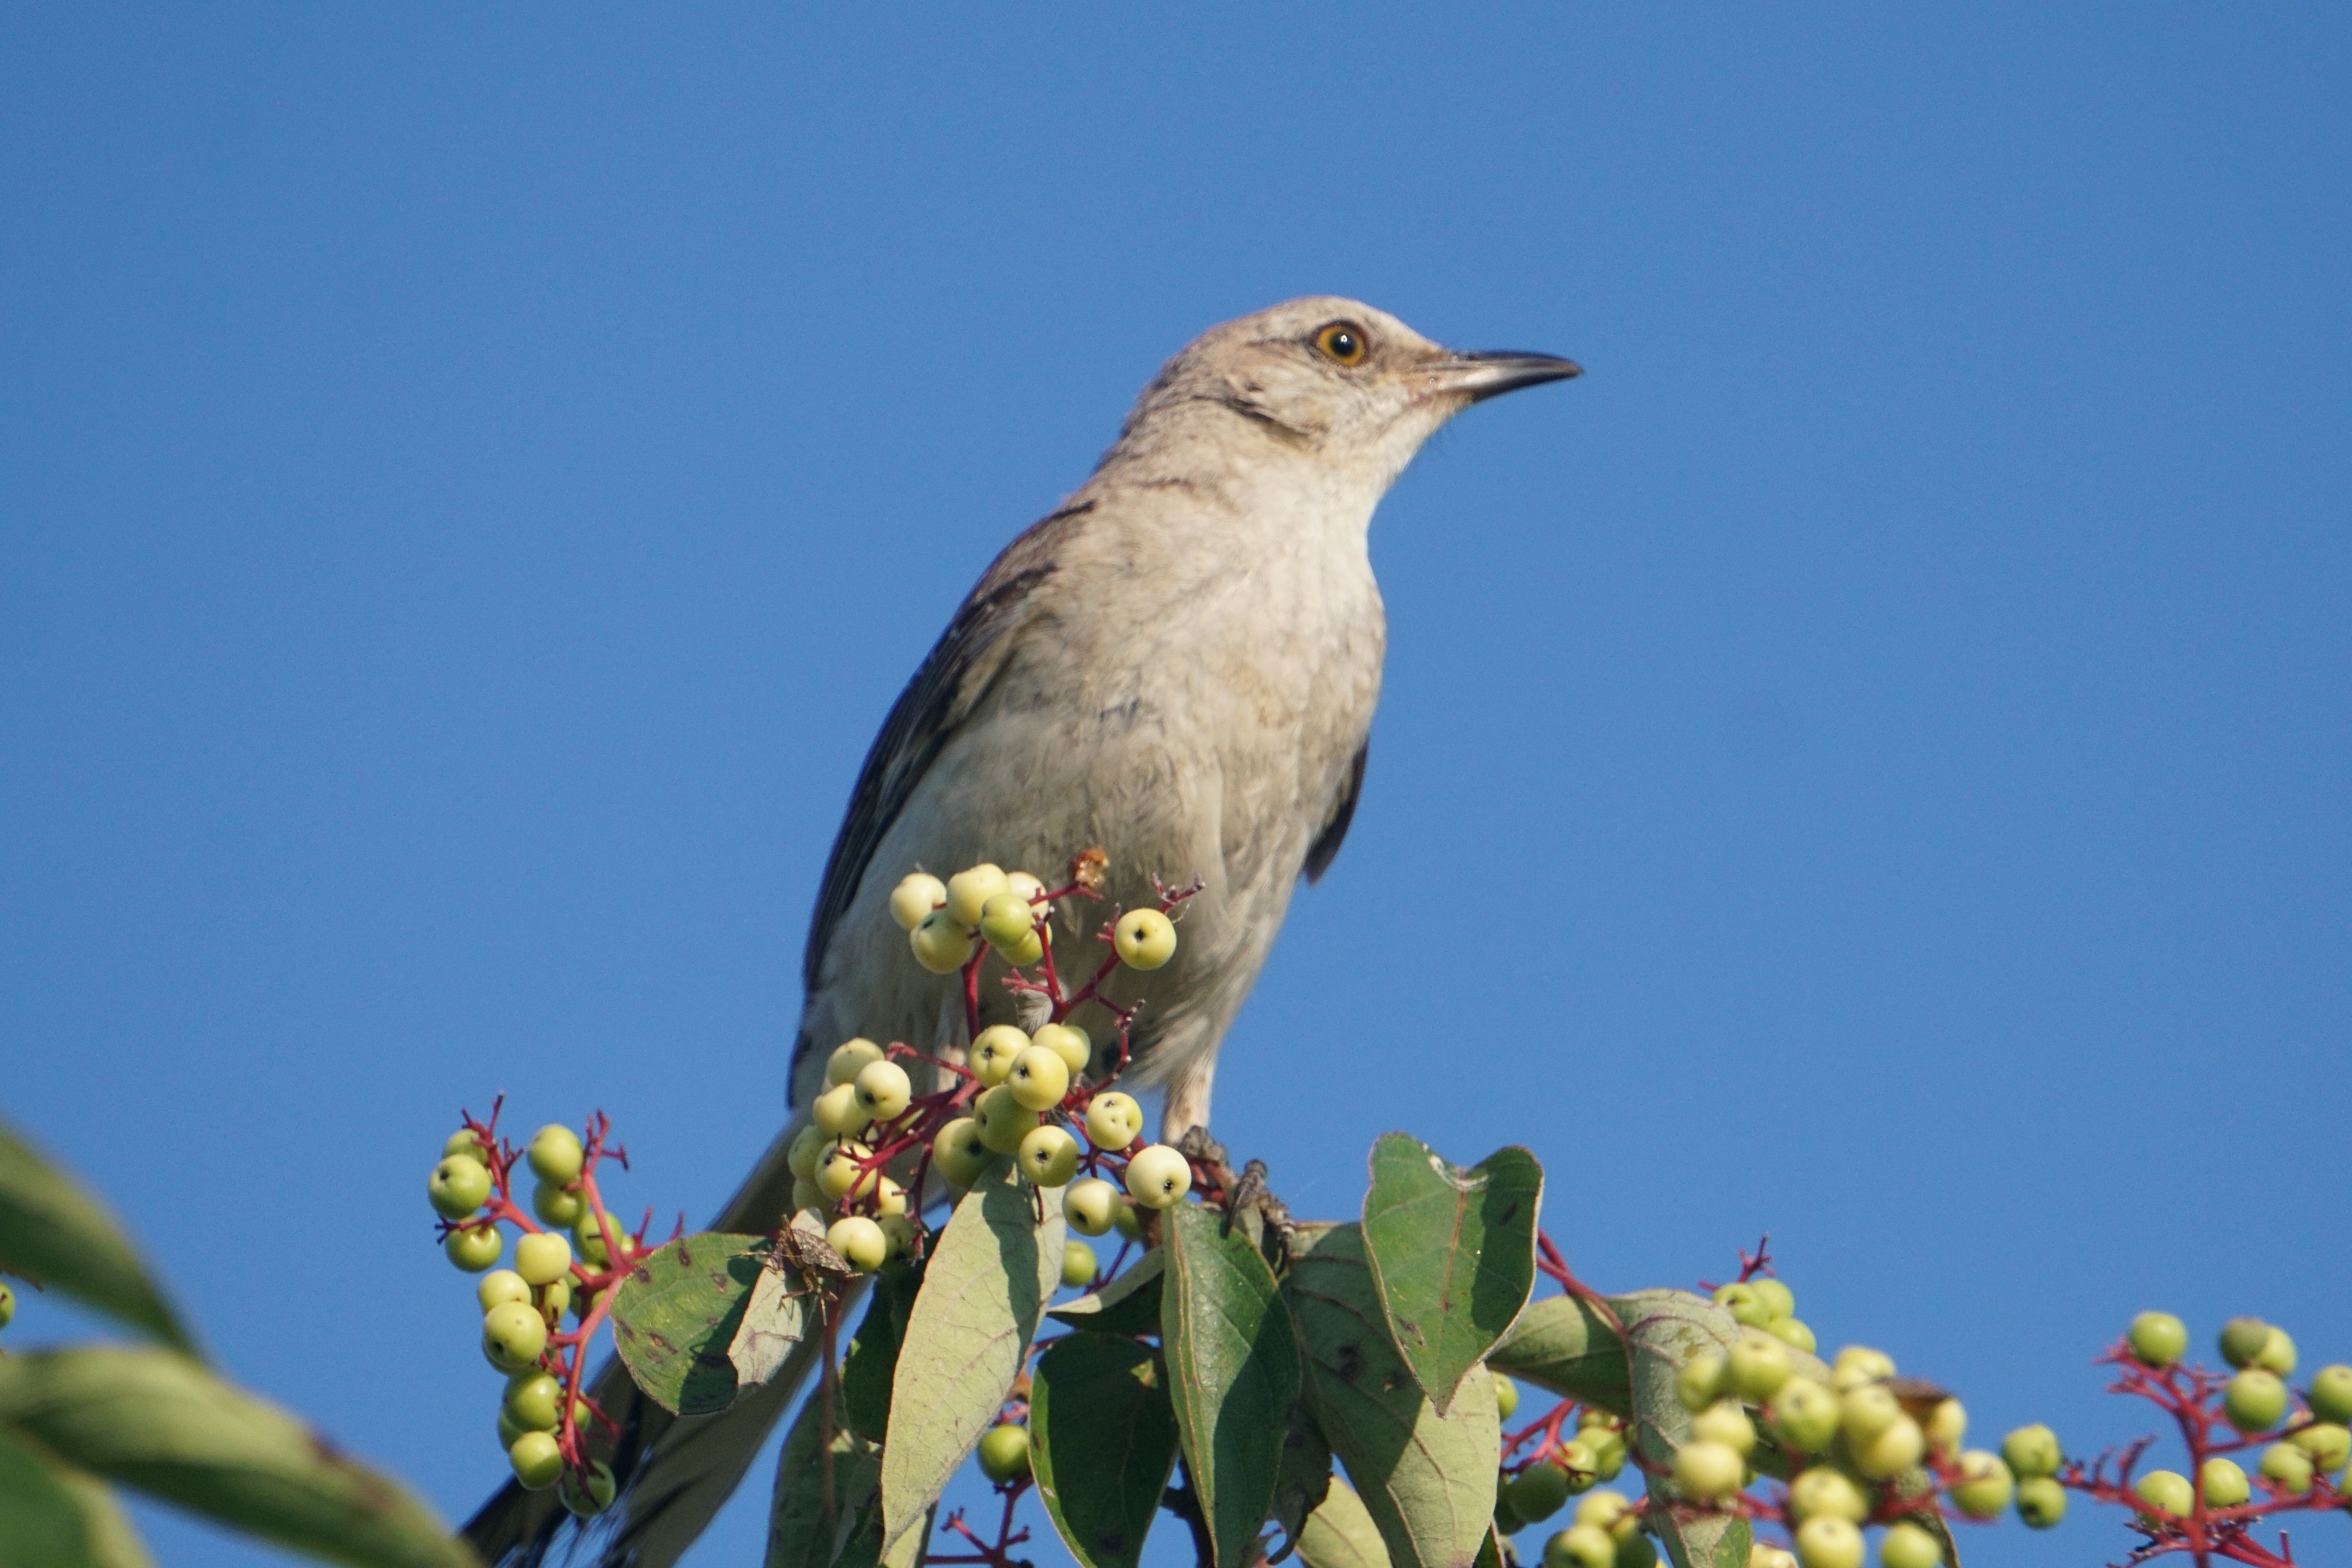 Northern mockingbird eating gray dogwood berries